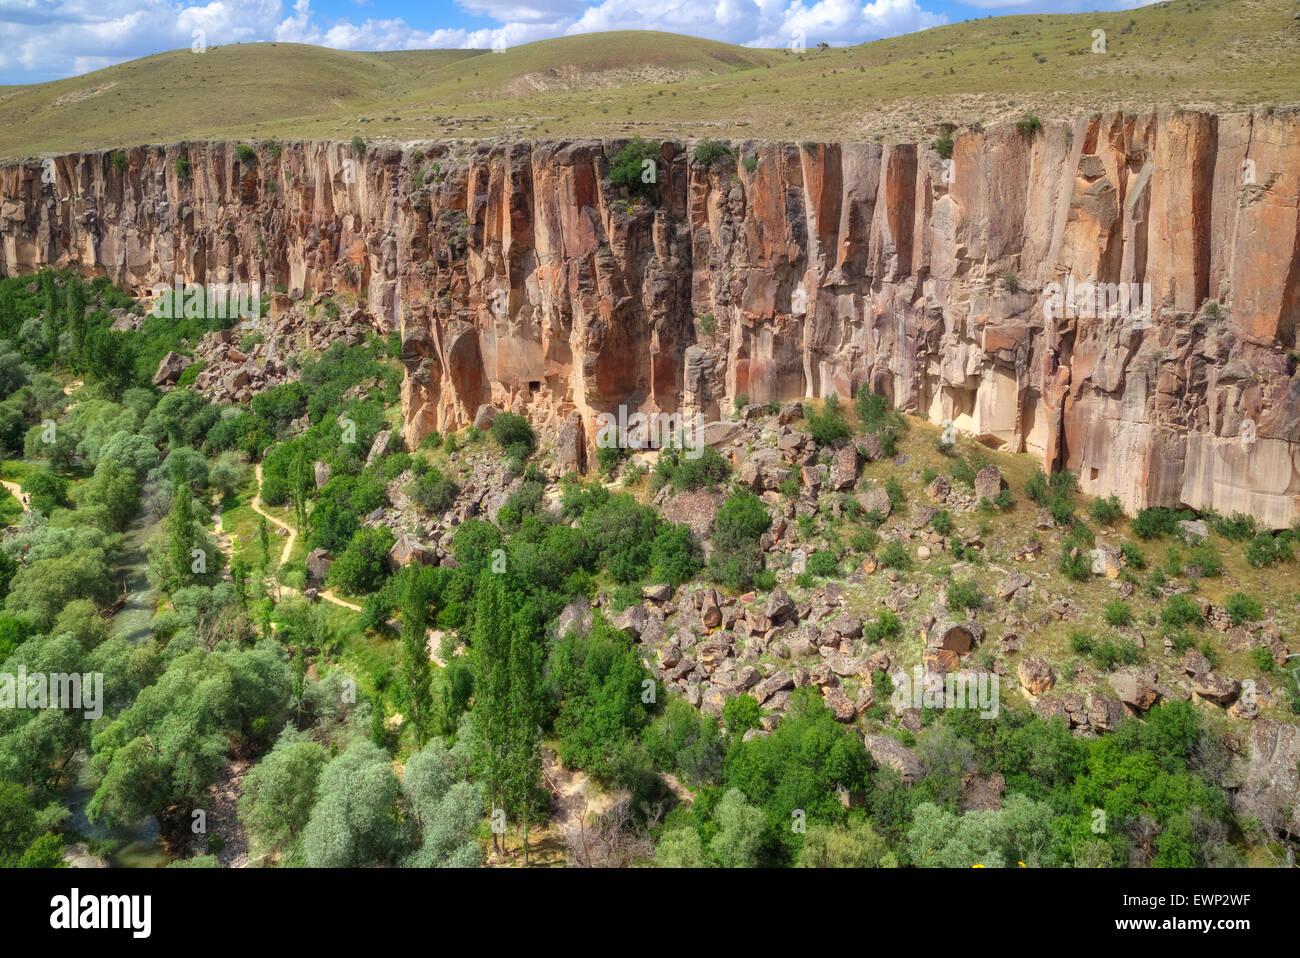 La vallée d'Ihlara, Guezelyurt, Aksaray, Anatolie, Turquie Banque D'Images